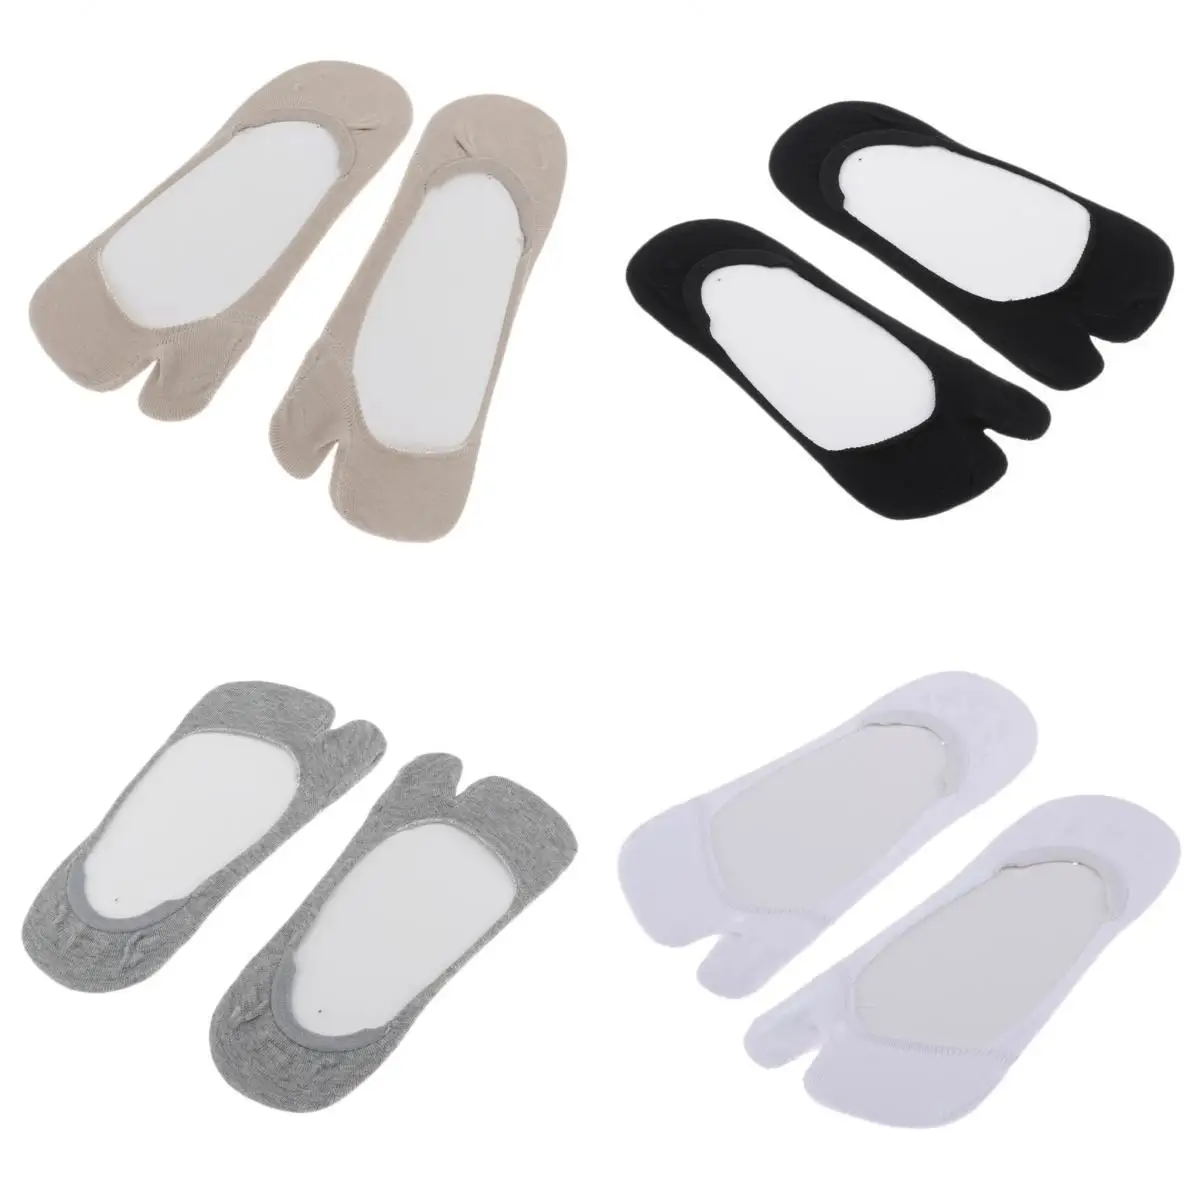 4 Pairs/Set Mixed Solid Color Two Toe Socks Cotton Tabi Socks Casual Boat Socks